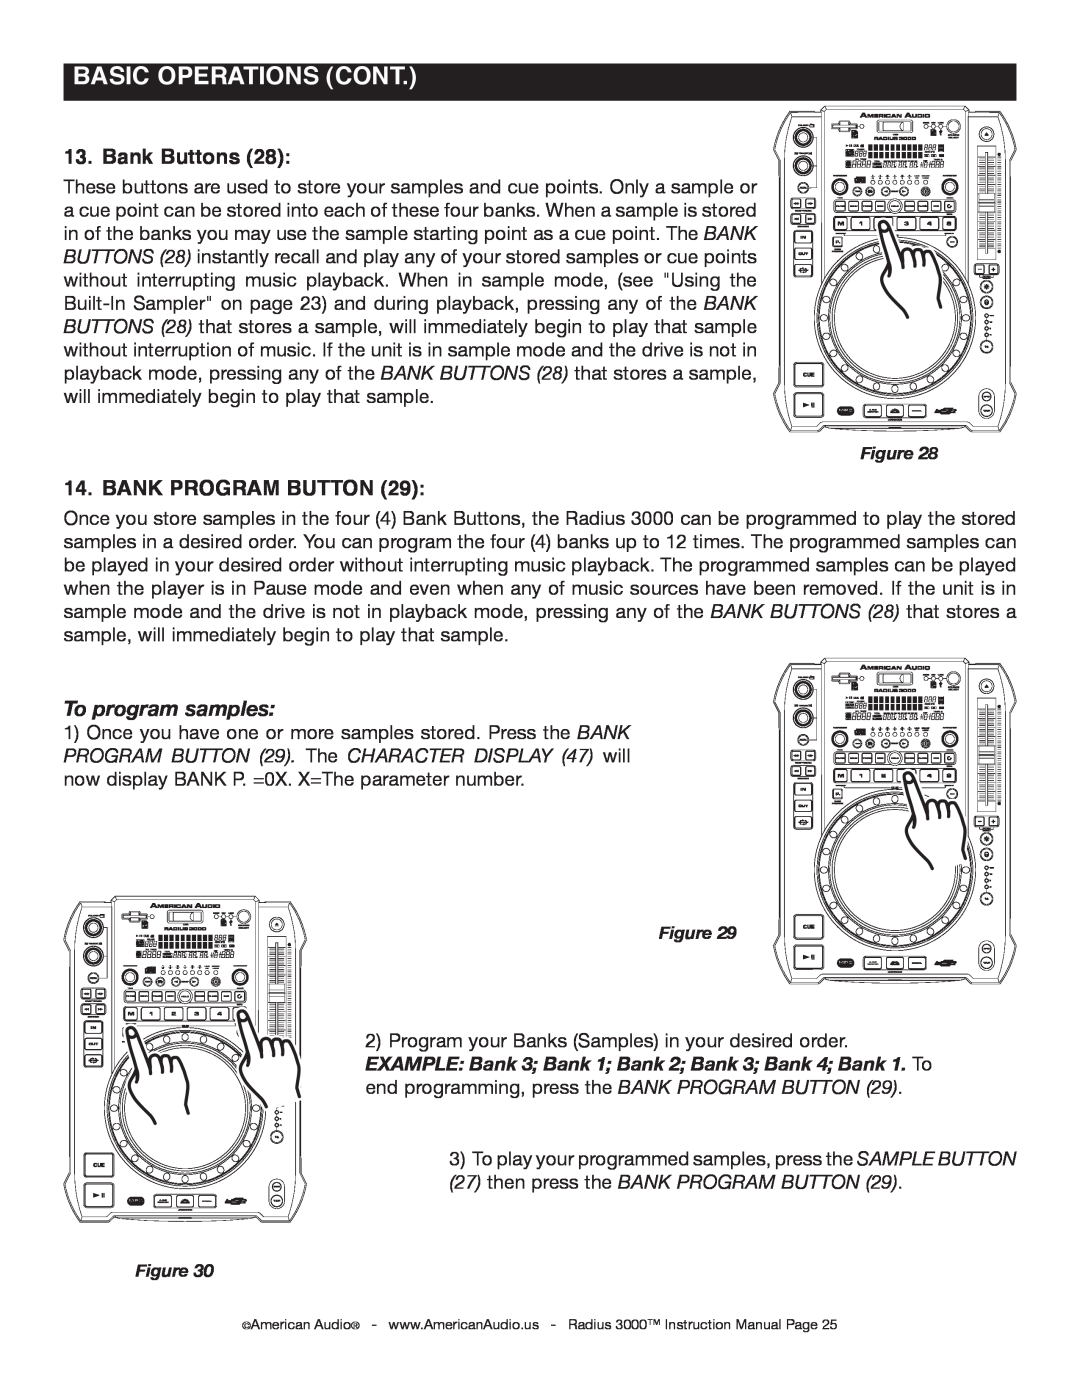 American Audio Radius 3000 manual Bank Buttons, Bank Program Button, To program samples, BASIC OPERATIONS Cont 